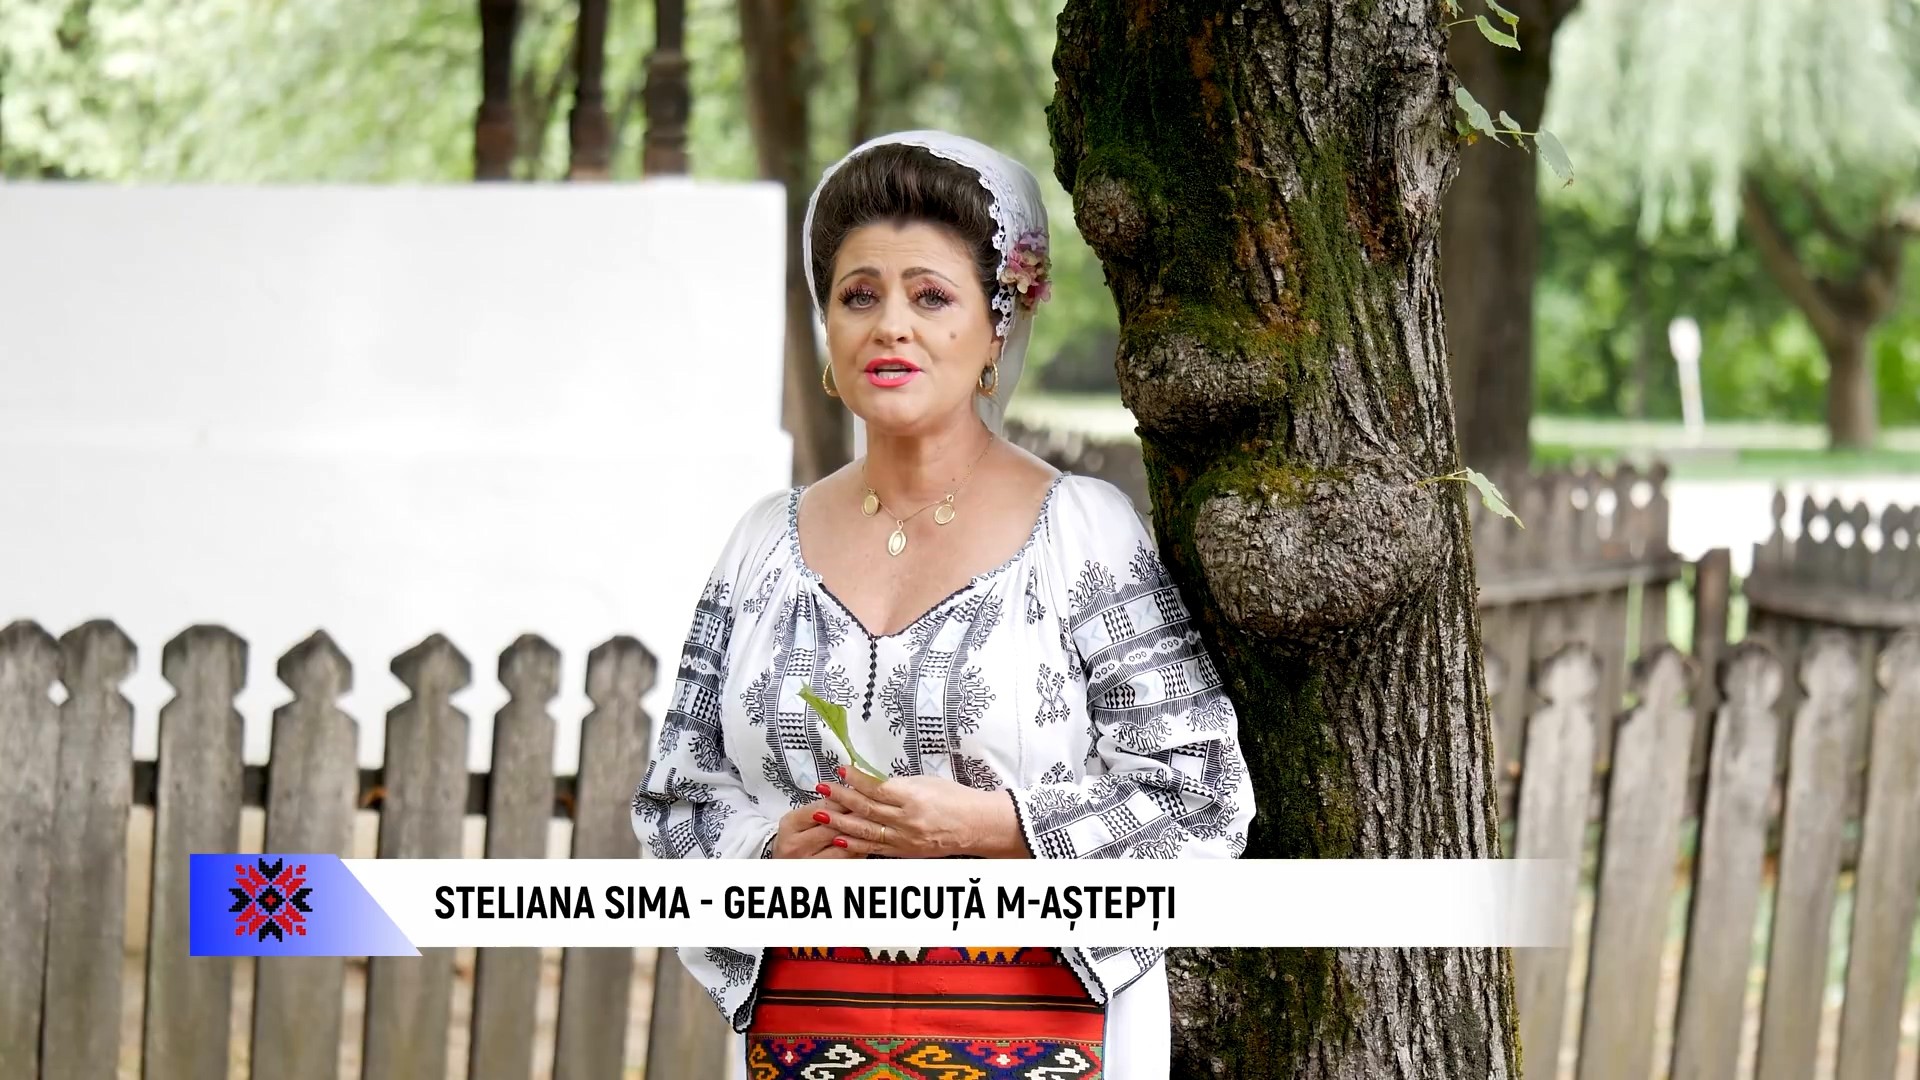 Steliana Sima - Geaba neicuta m-astepti (NOU 2021) - Versuri